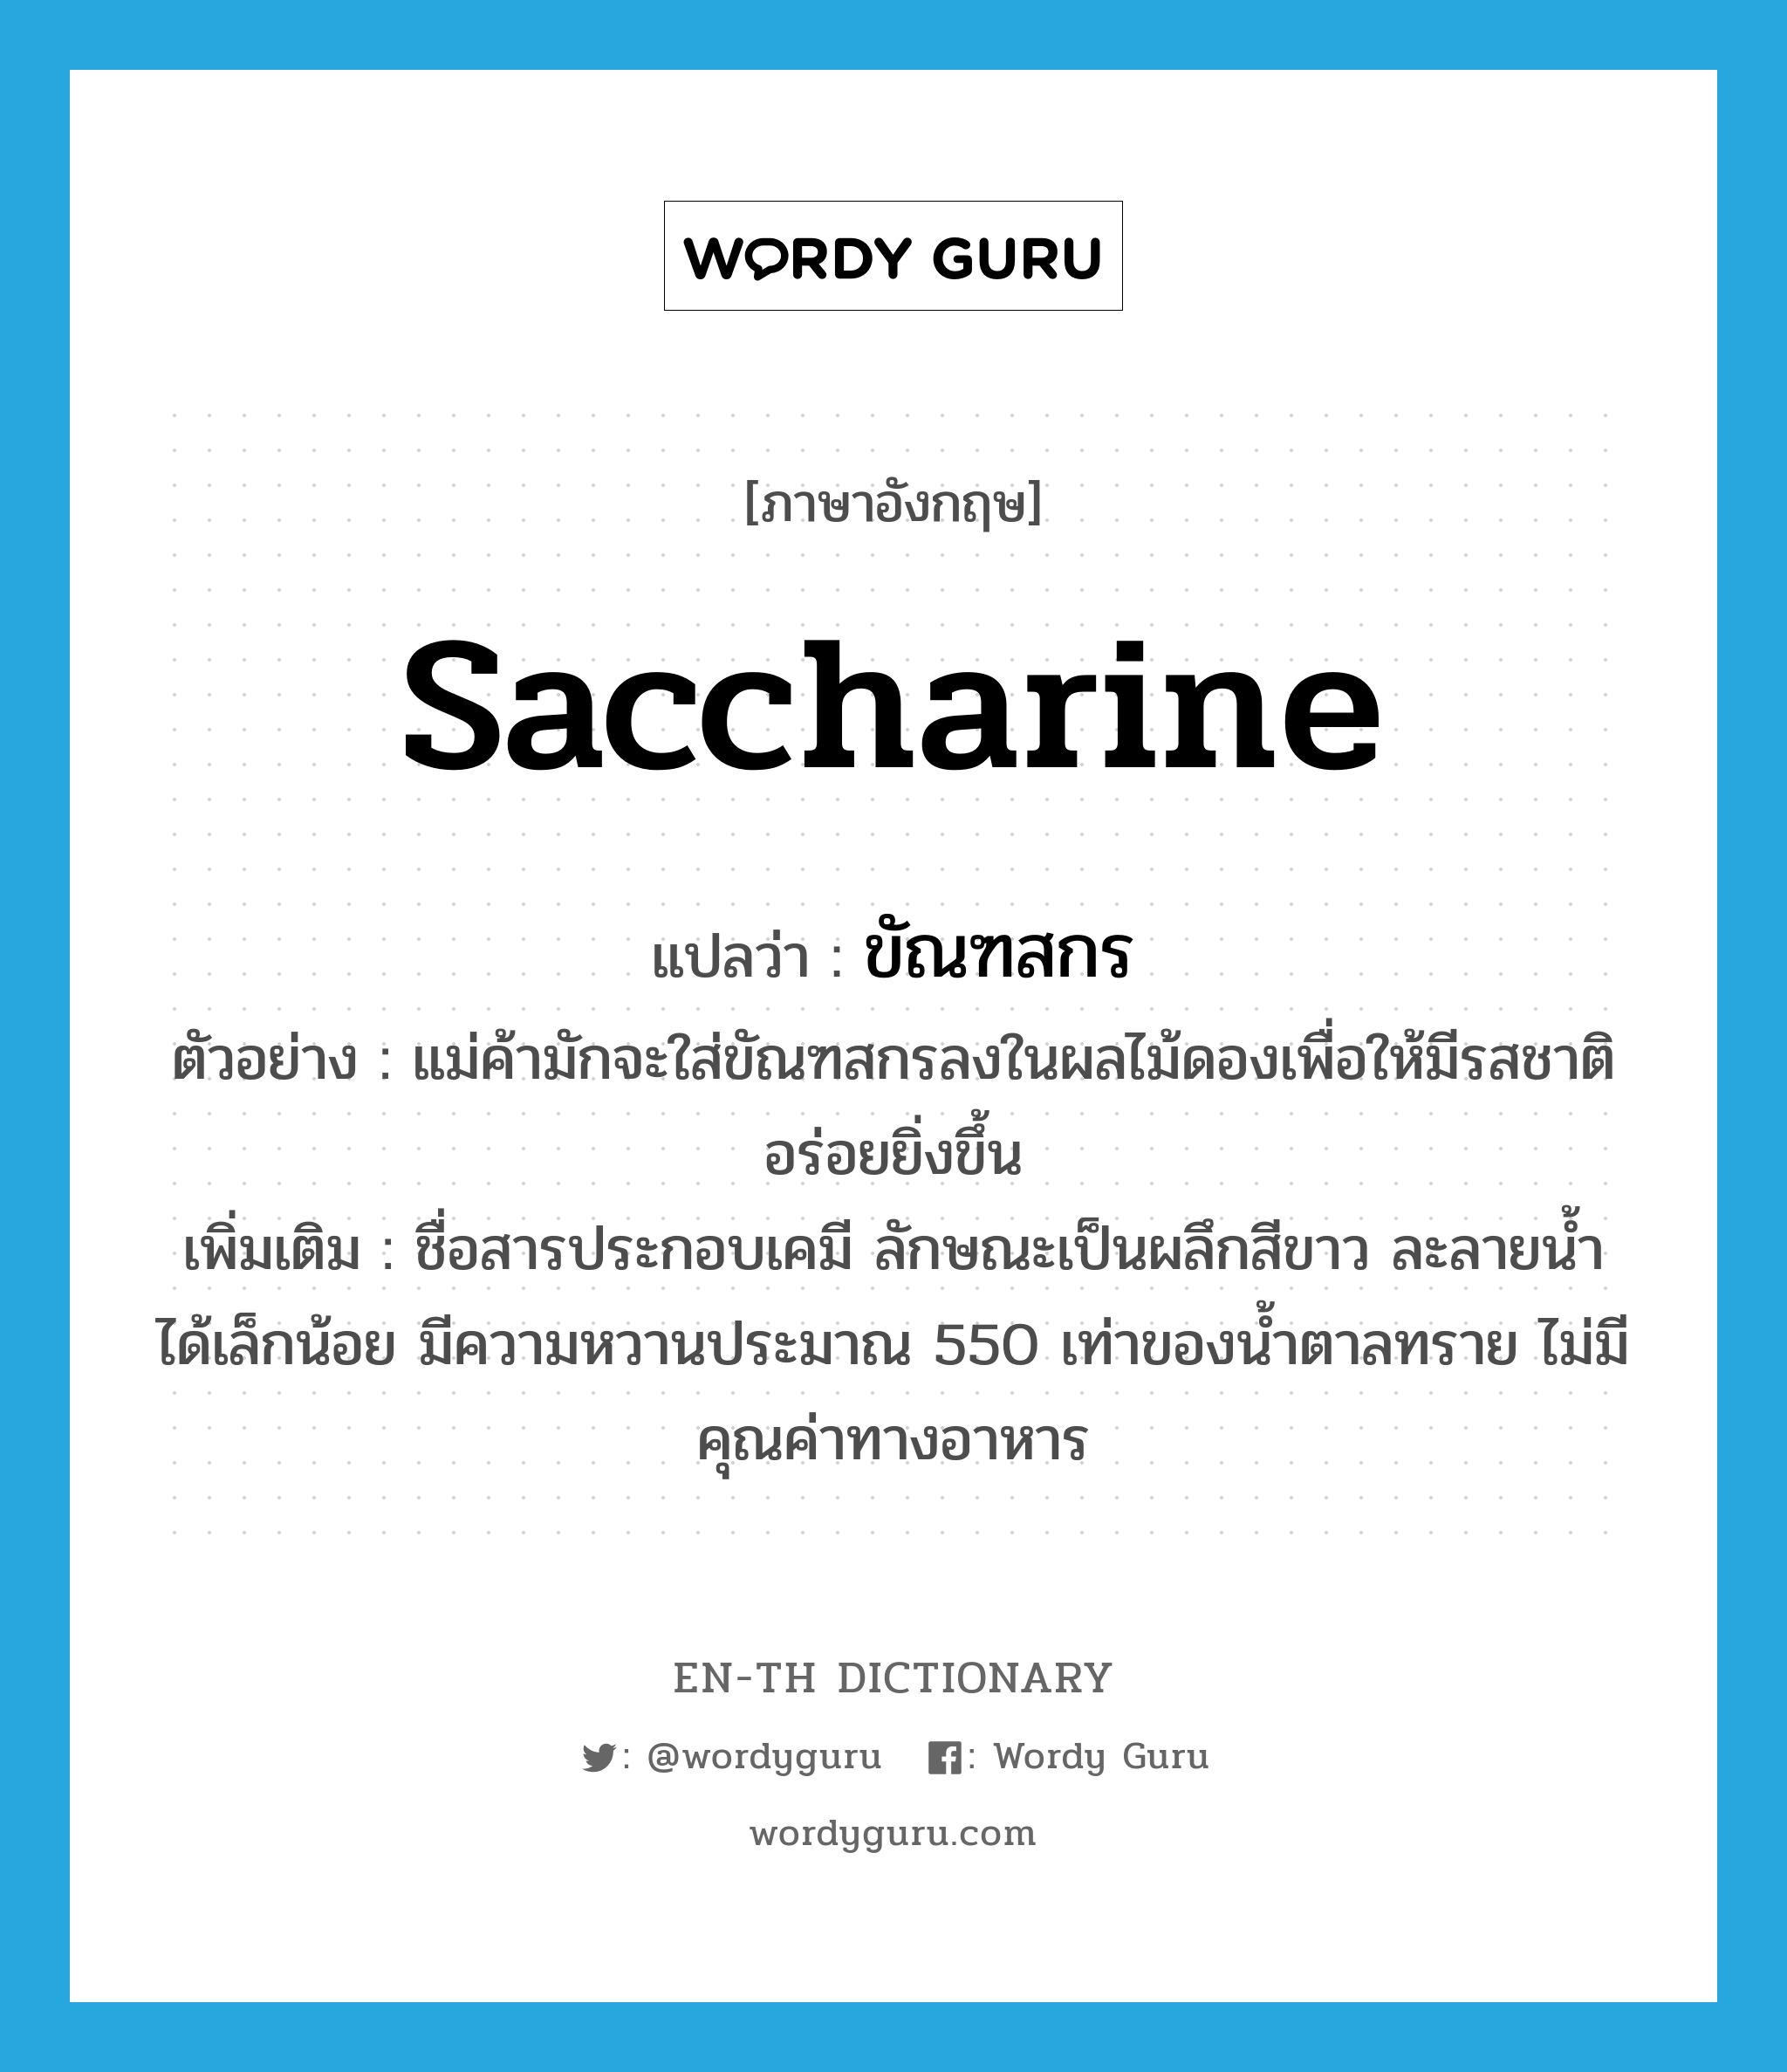 saccharine แปลว่า?, คำศัพท์ภาษาอังกฤษ saccharine แปลว่า ขัณฑสกร ประเภท N ตัวอย่าง แม่ค้ามักจะใส่ขัณฑสกรลงในผลไม้ดองเพื่อให้มีรสชาติอร่อยยิ่งขึ้น เพิ่มเติม ชื่อสารประกอบเคมี ลักษณะเป็นผลึกสีขาว ละลายน้ำได้เล็กน้อย มีความหวานประมาณ 550 เท่าของน้ำตาลทราย ไม่มีคุณค่าทางอาหาร หมวด N